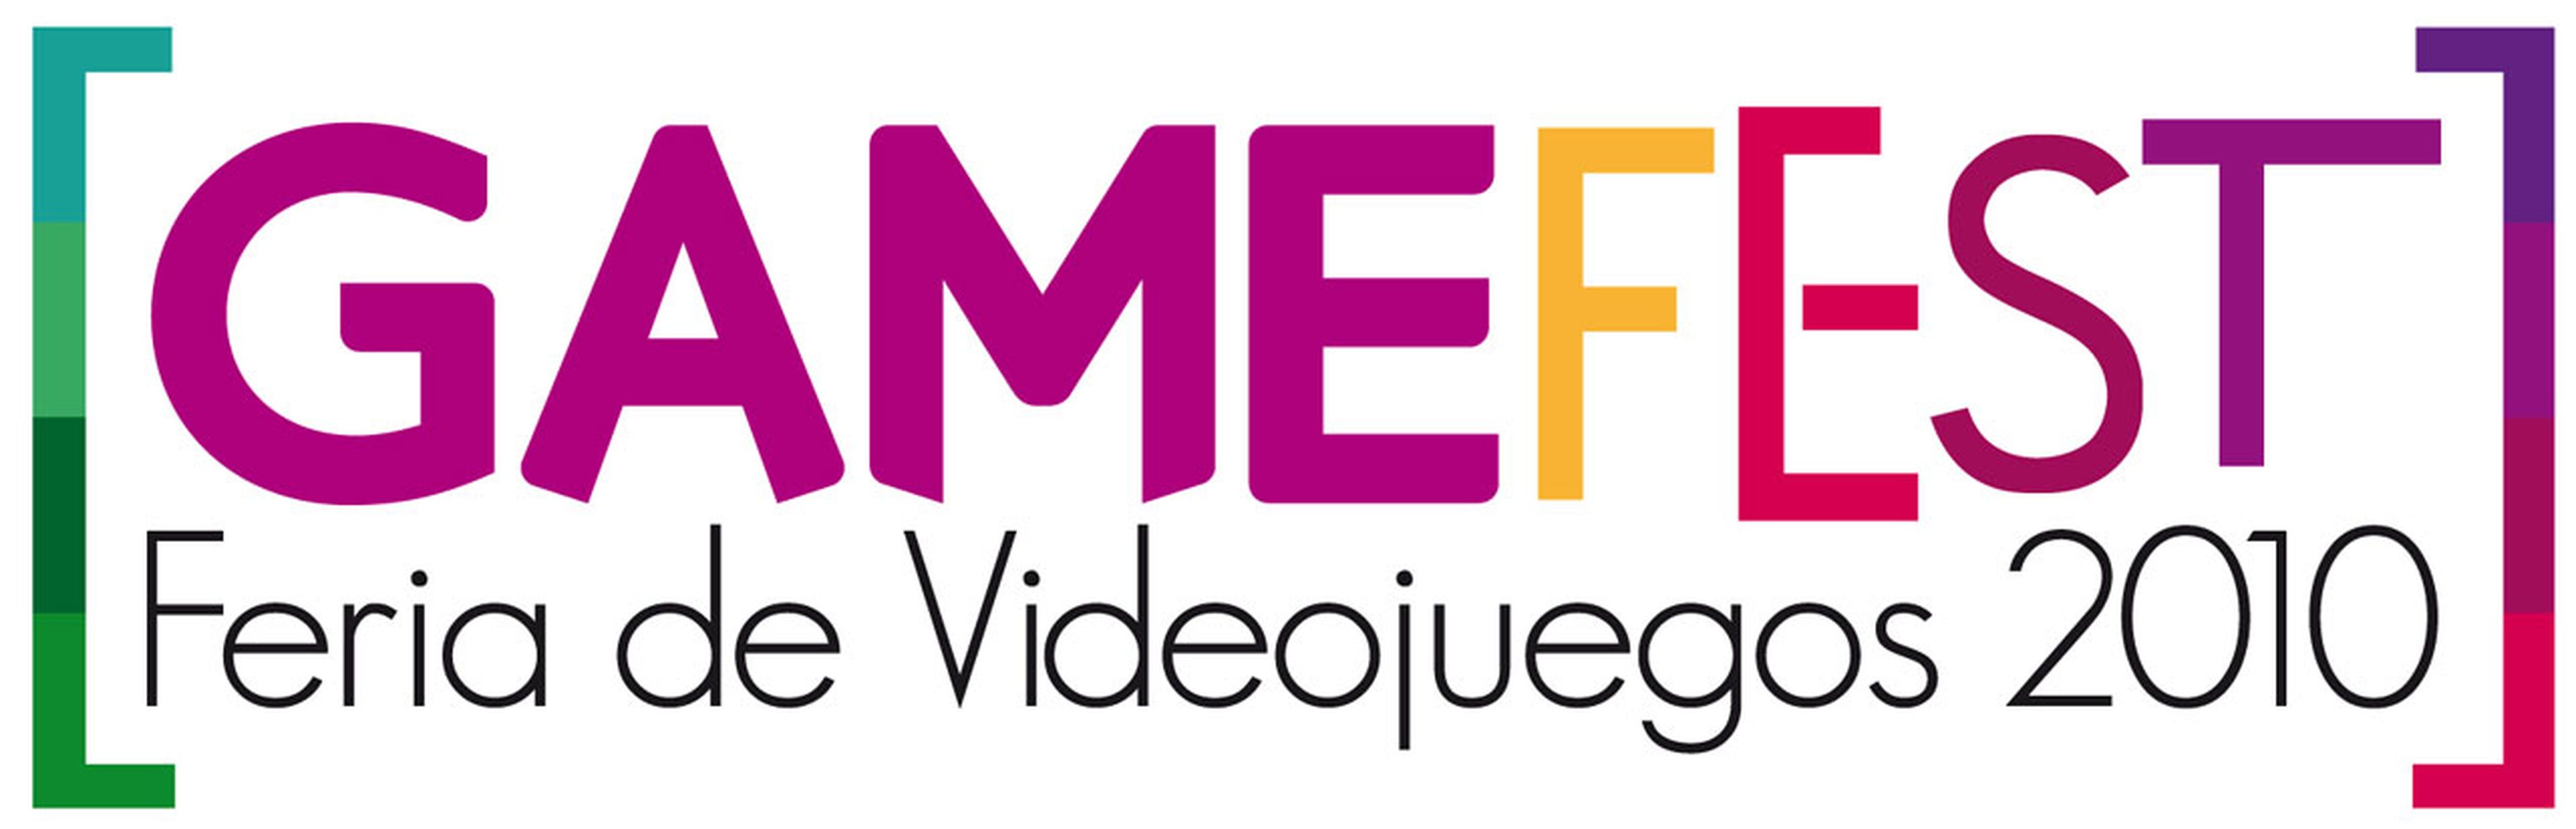 Gamefest será el E3 español